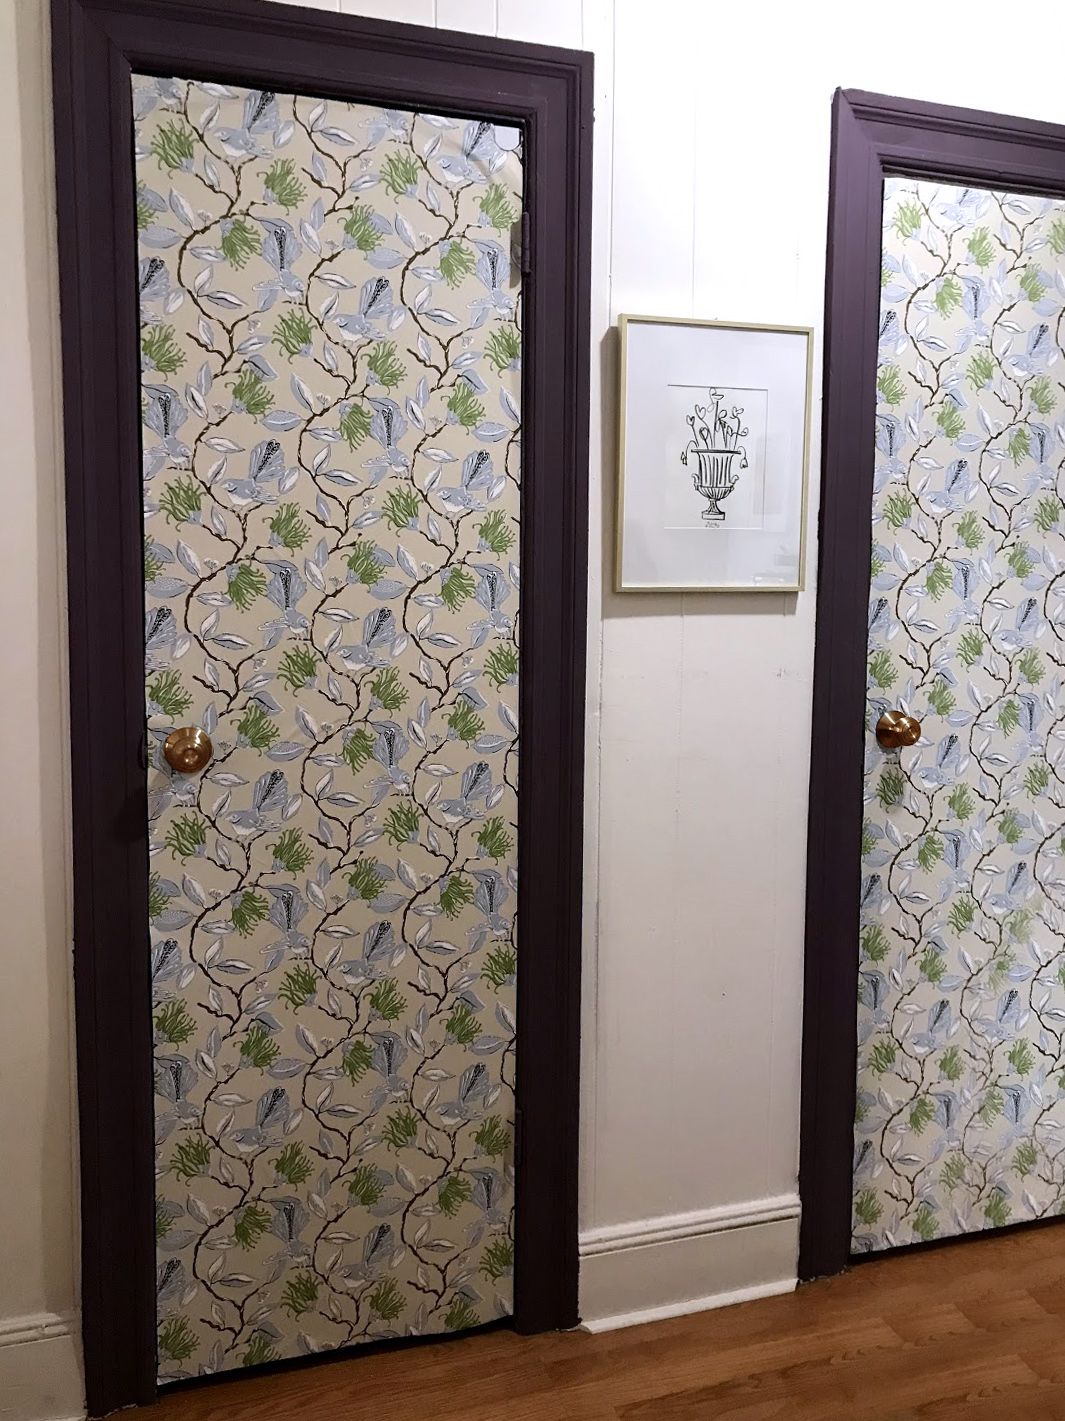 15 Stylish Closet Doors Ideas  Easy Upgrades for Closet Doors